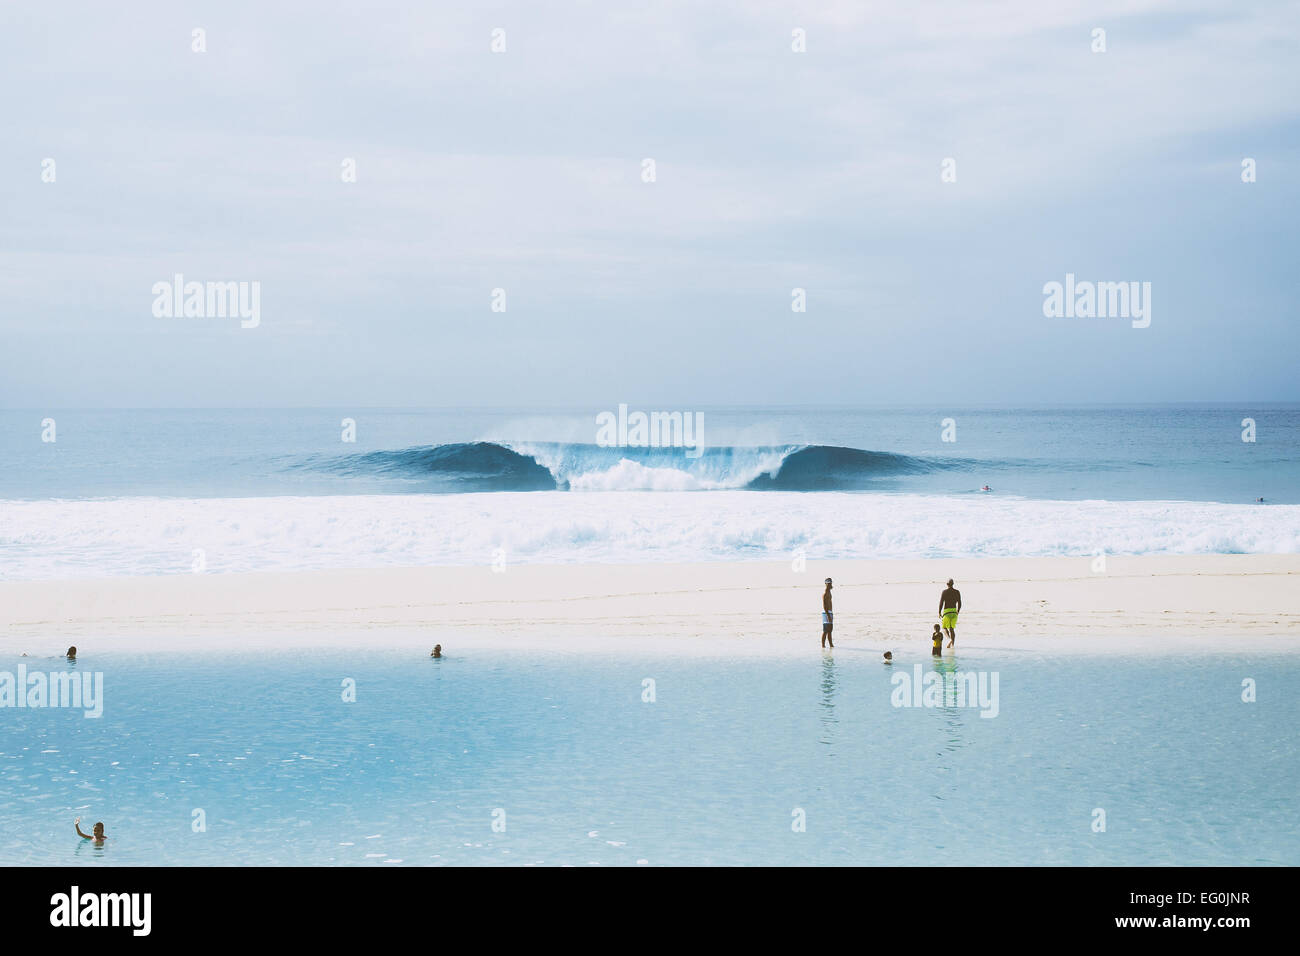 Hawaii, Banzai Pipeline, Perfectly shaped wave by sandy beach Stock Photo